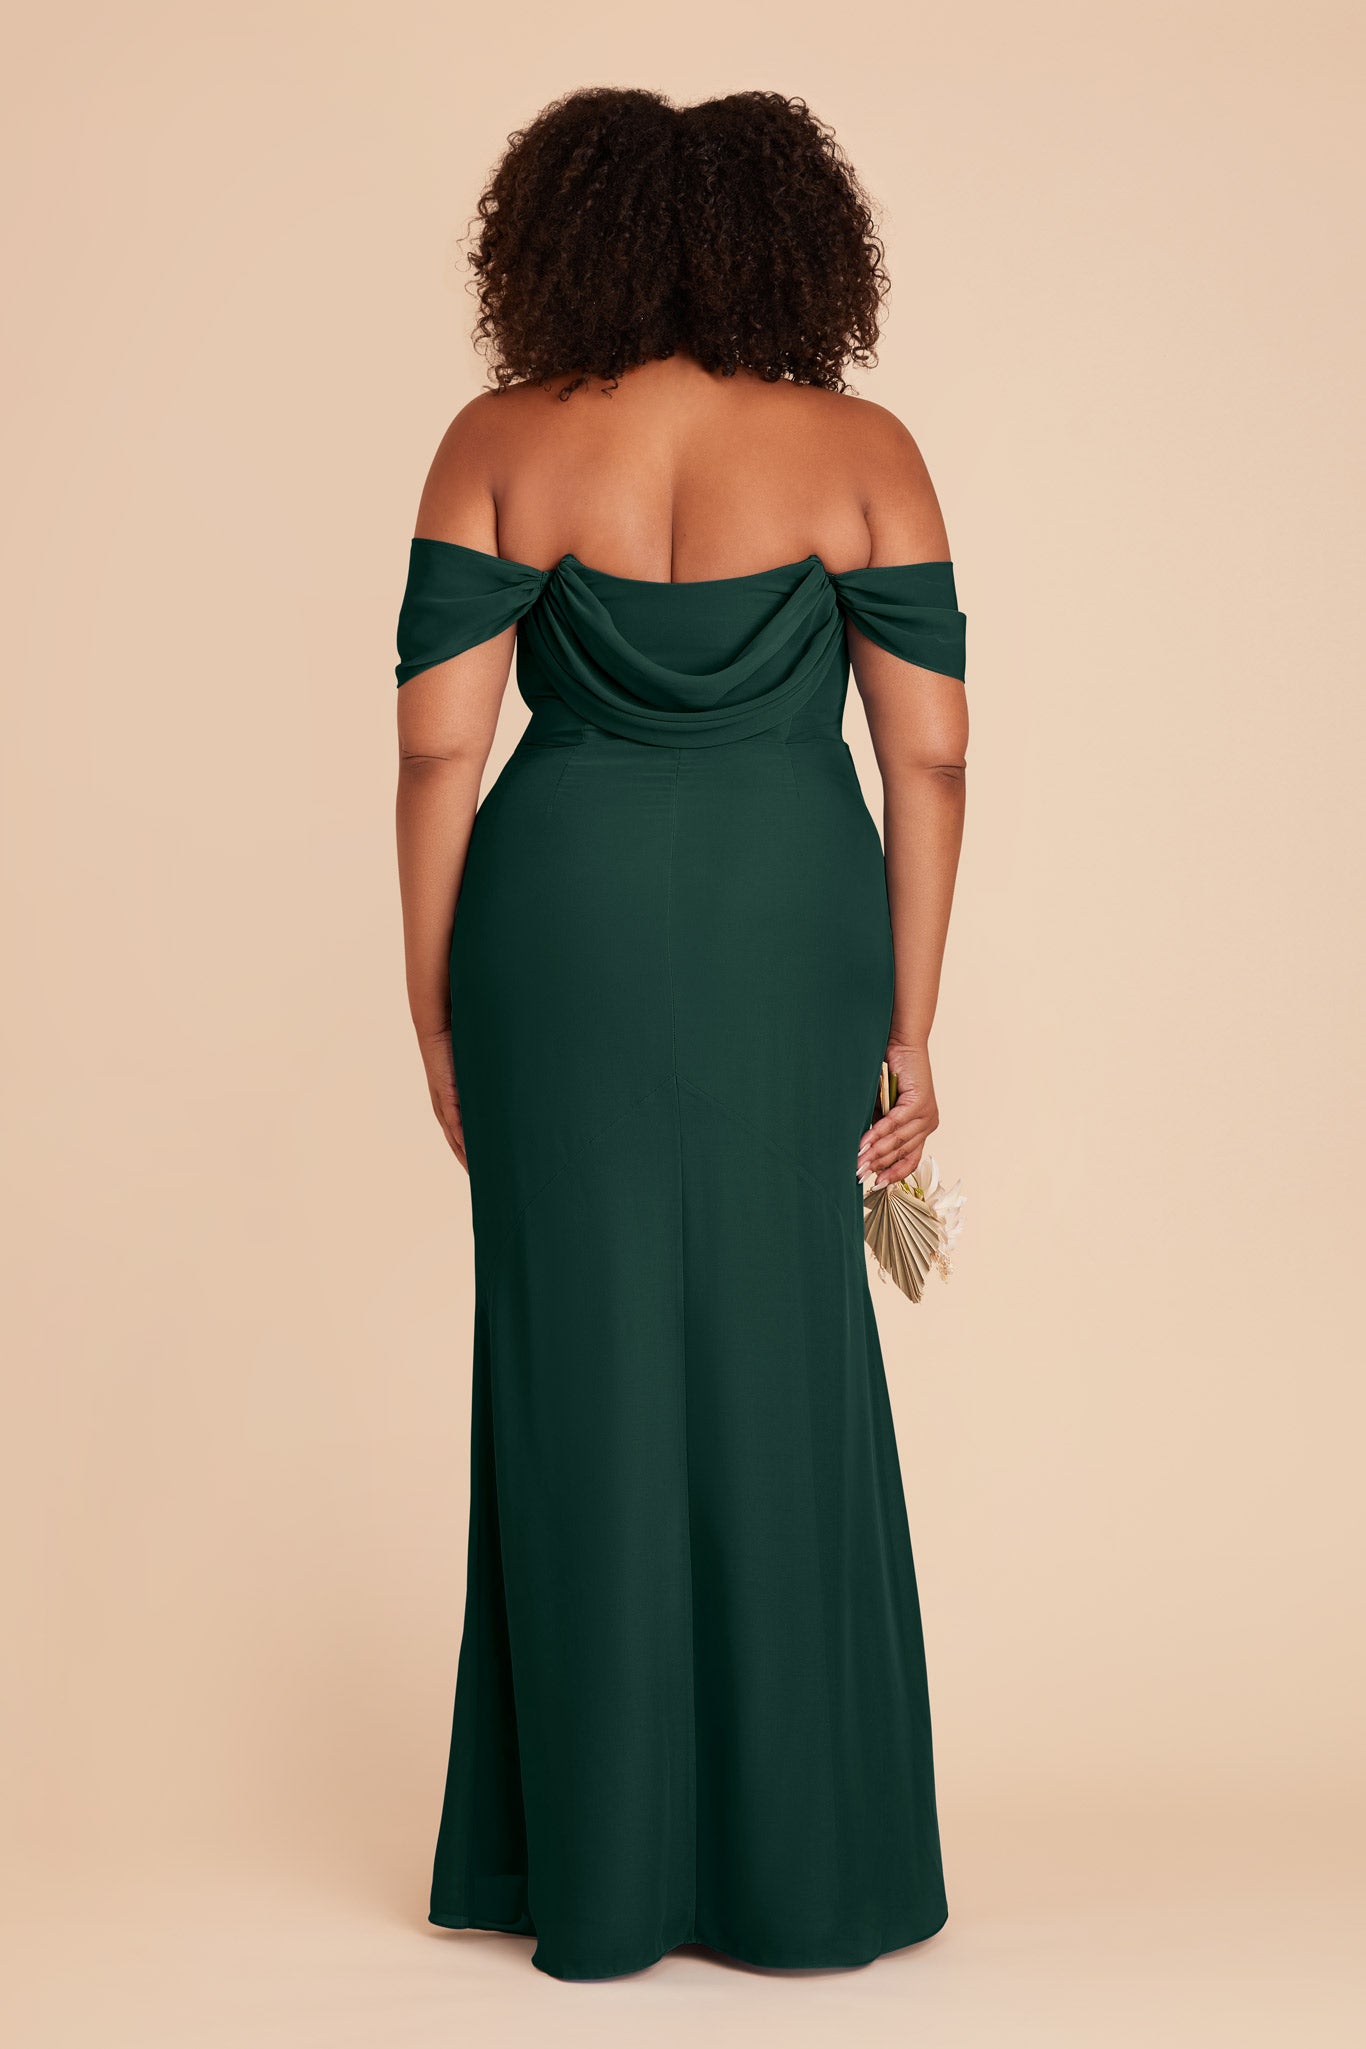 Emerald Mira Convertible Dress by Birdy Grey